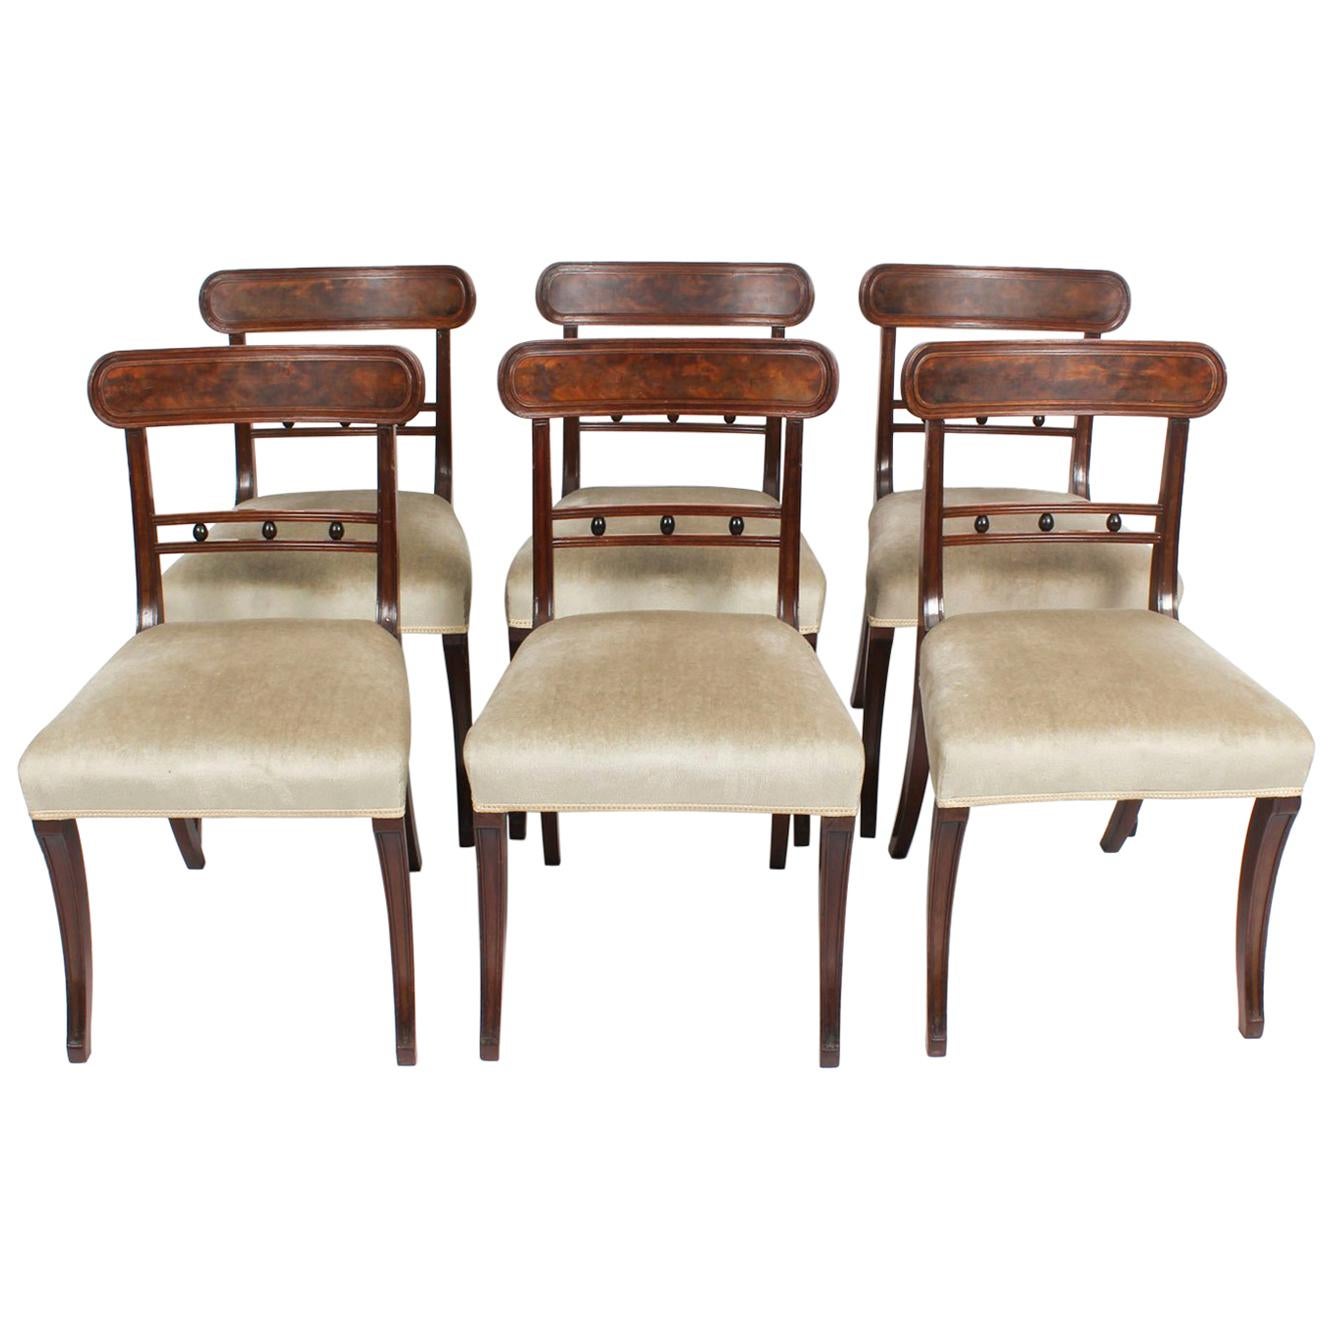 Antique Set of Six Regency Mahogany Dining Chairs, 19th Century